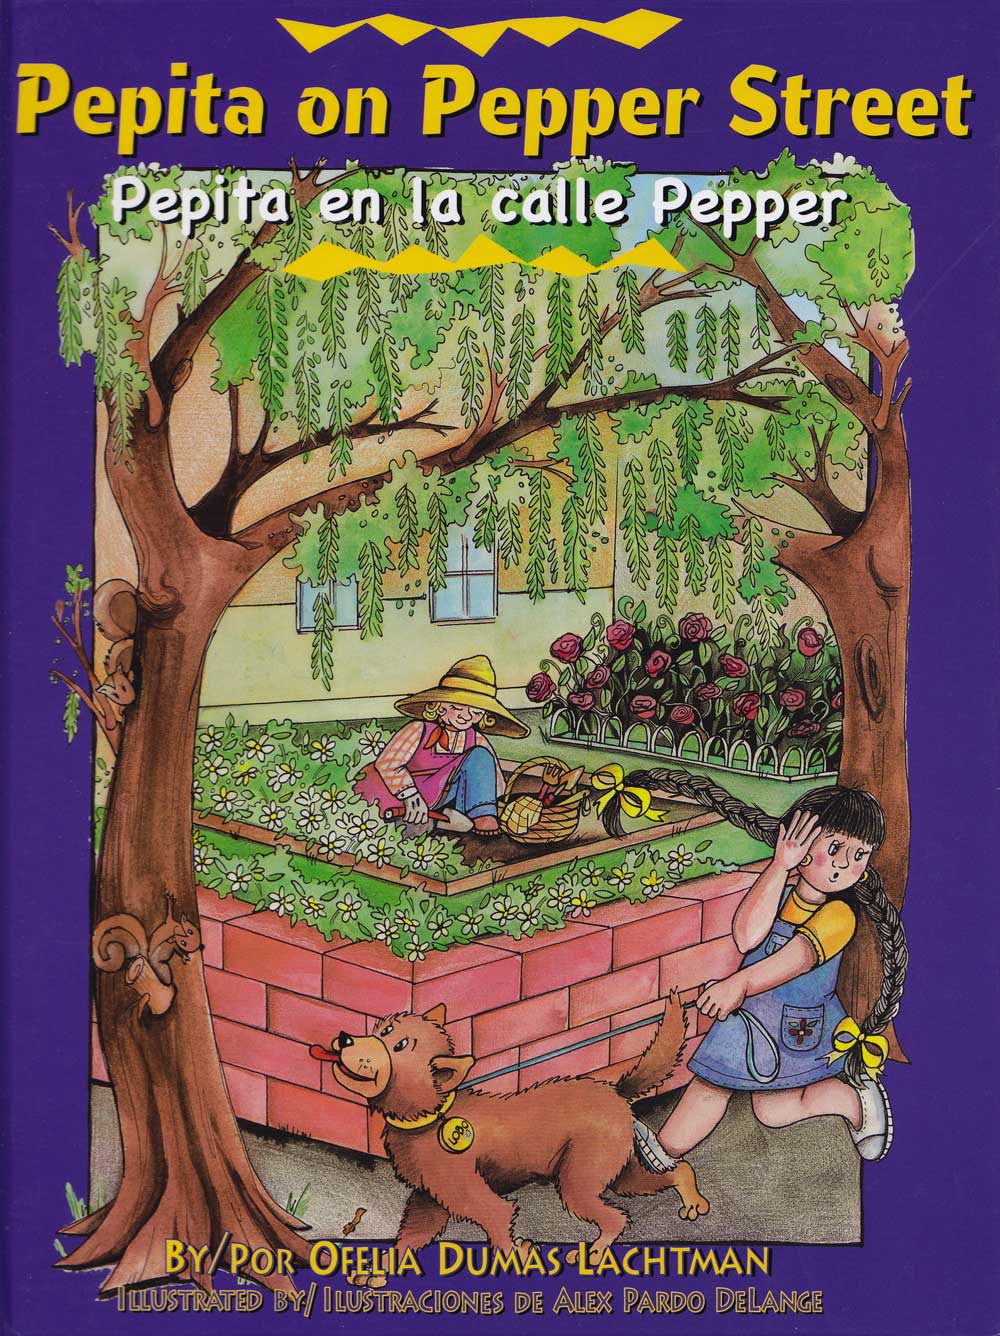 Pepita en la calle Pepper - Pepita on Pepper Street, Del Sol Books